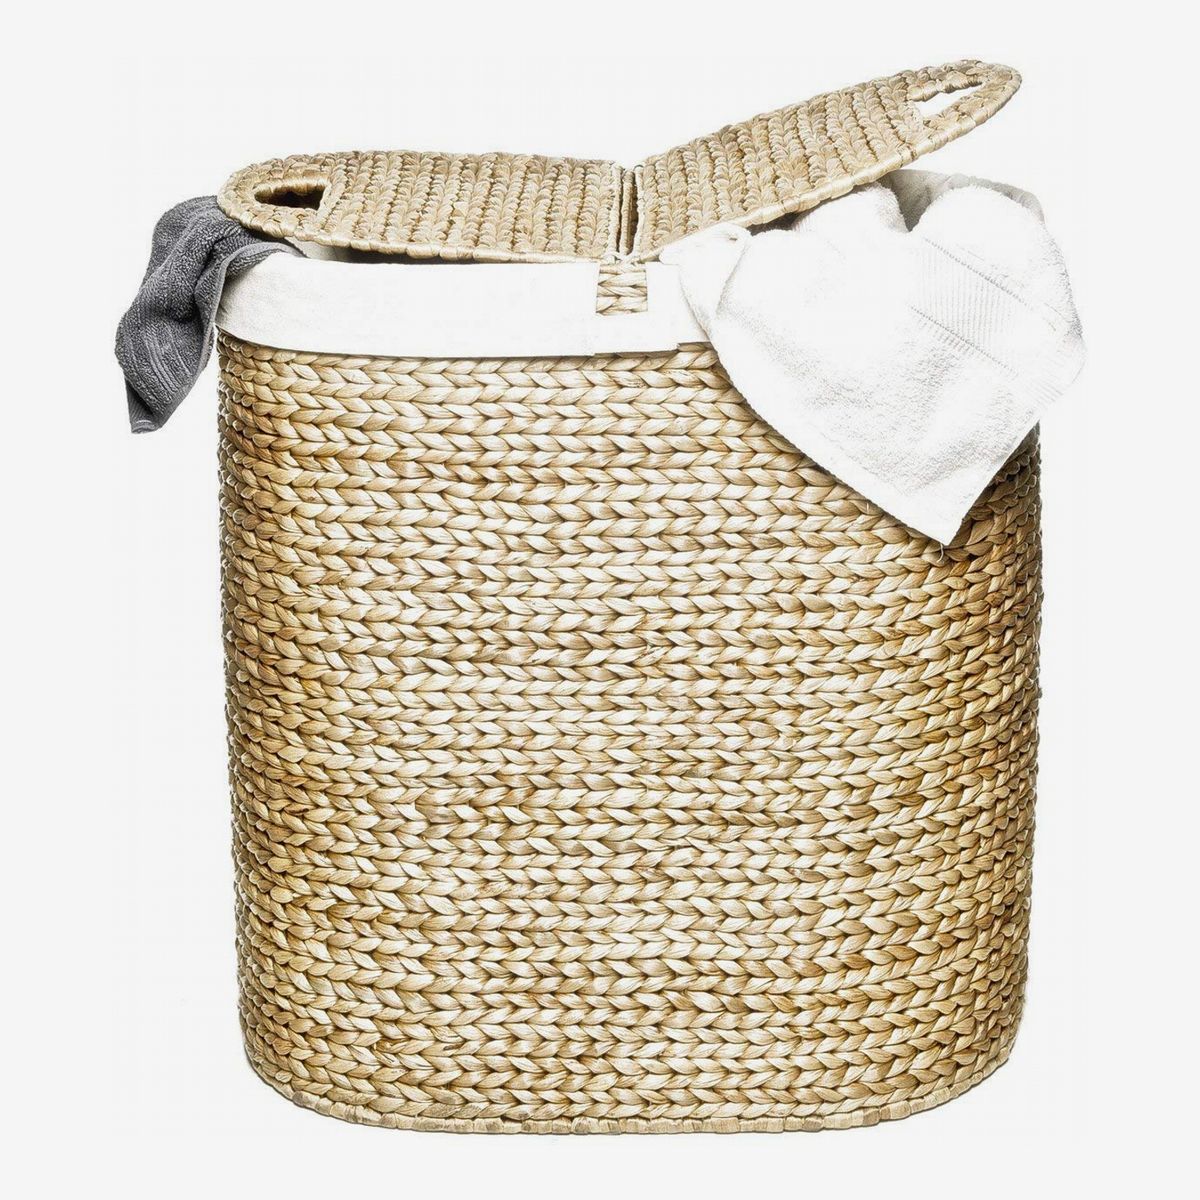 separated laundry basket